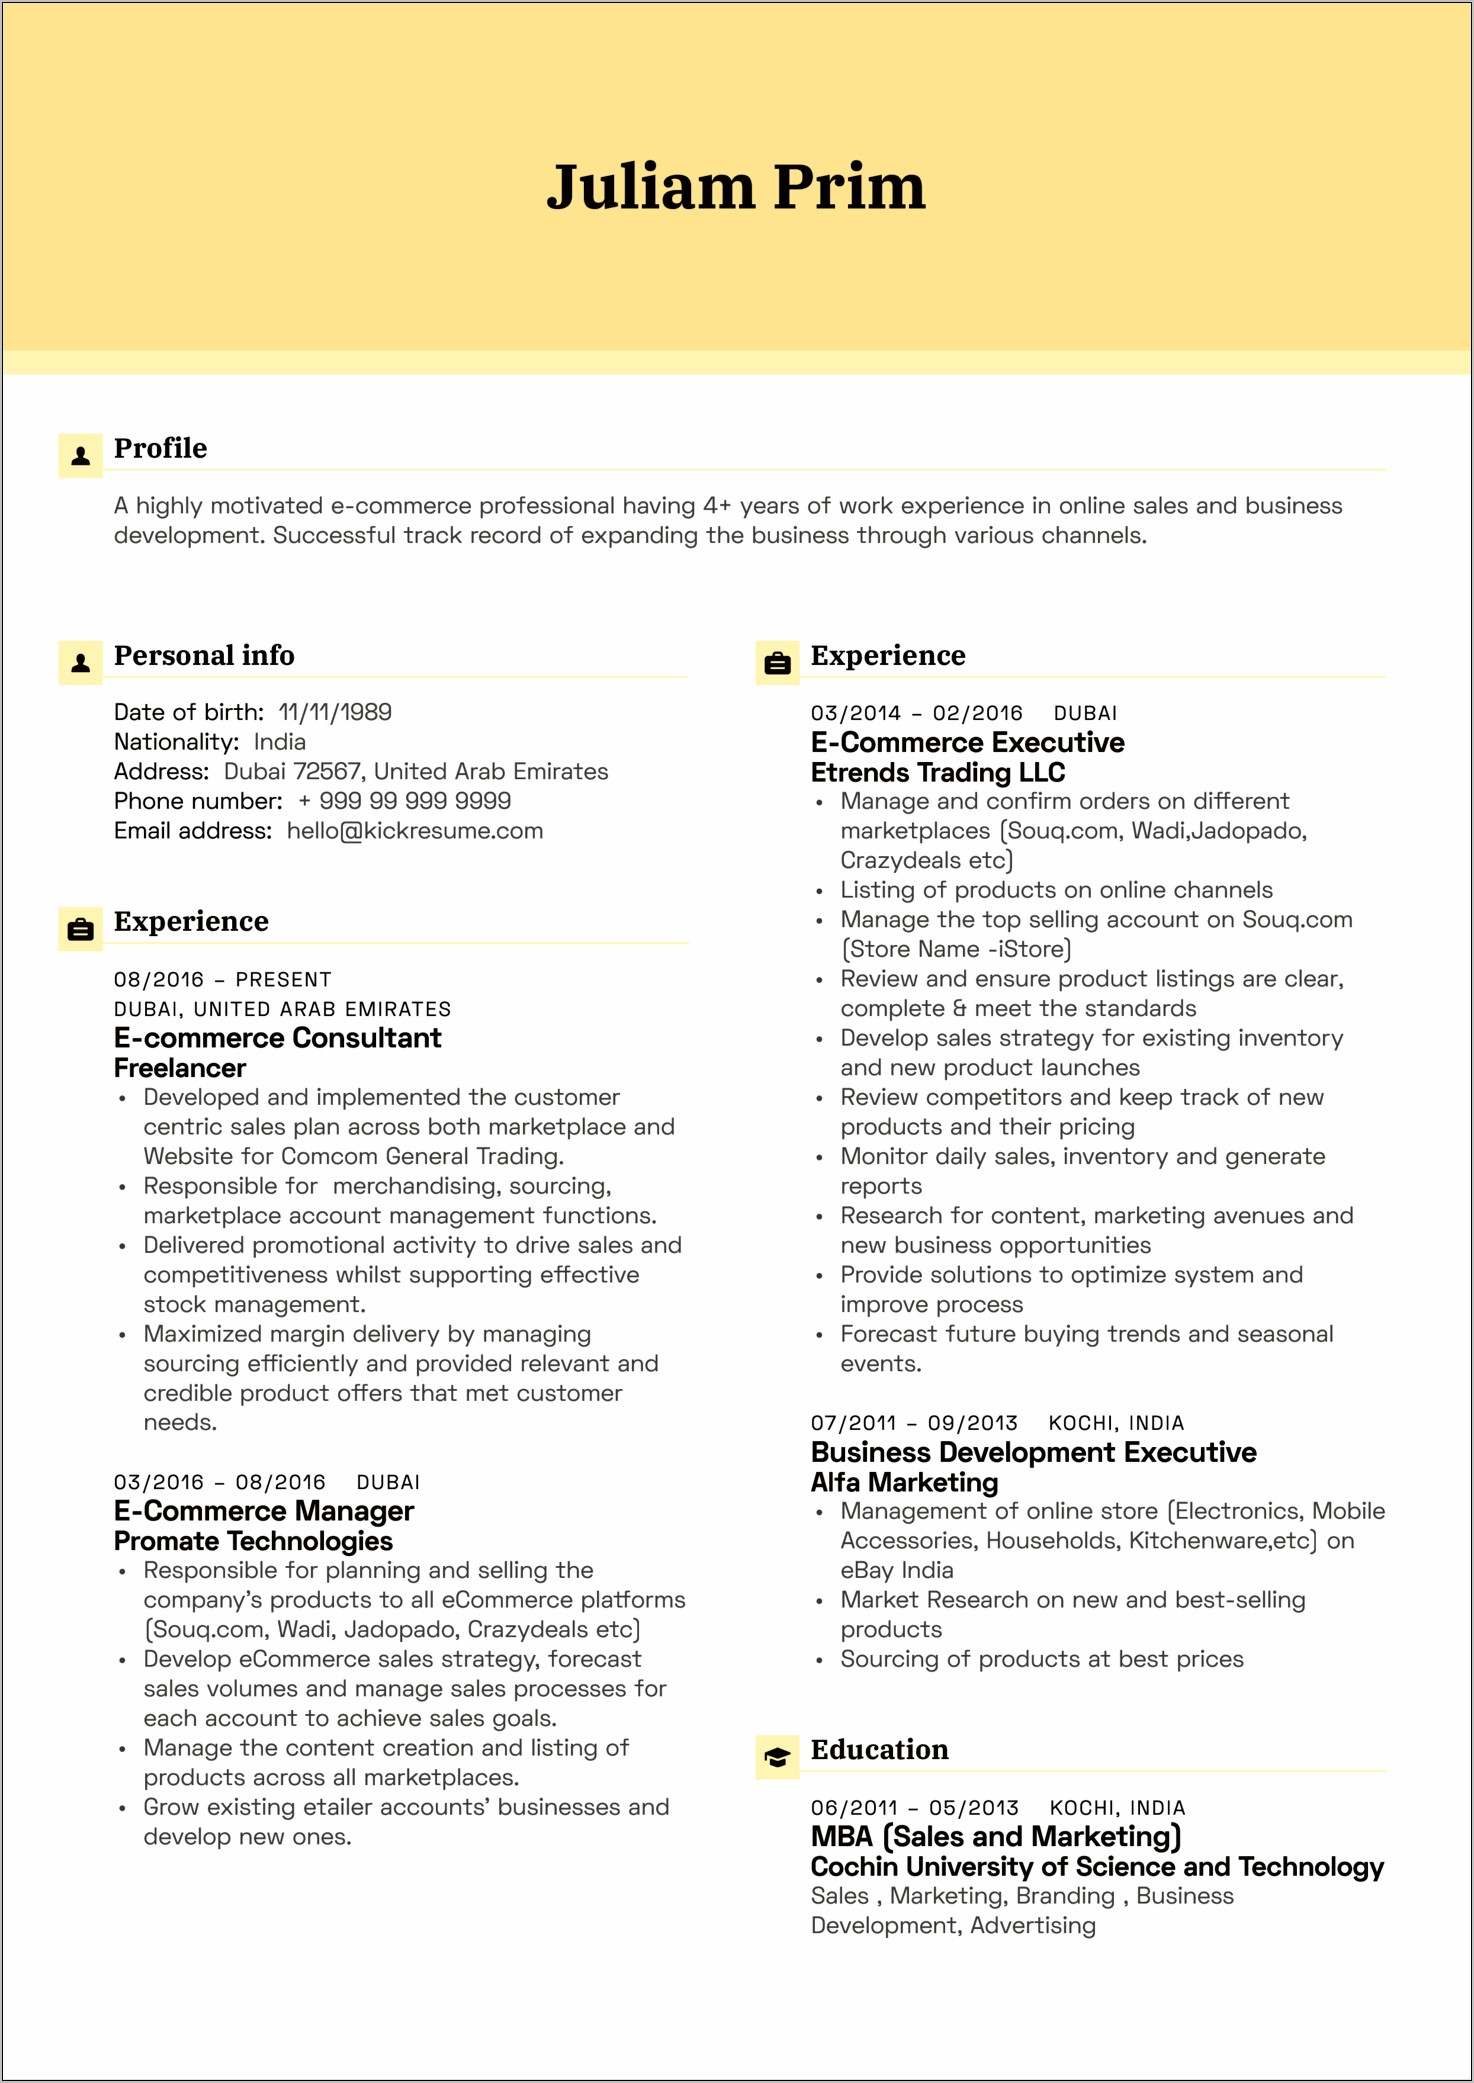 Resume Listing Job Experience Online Work